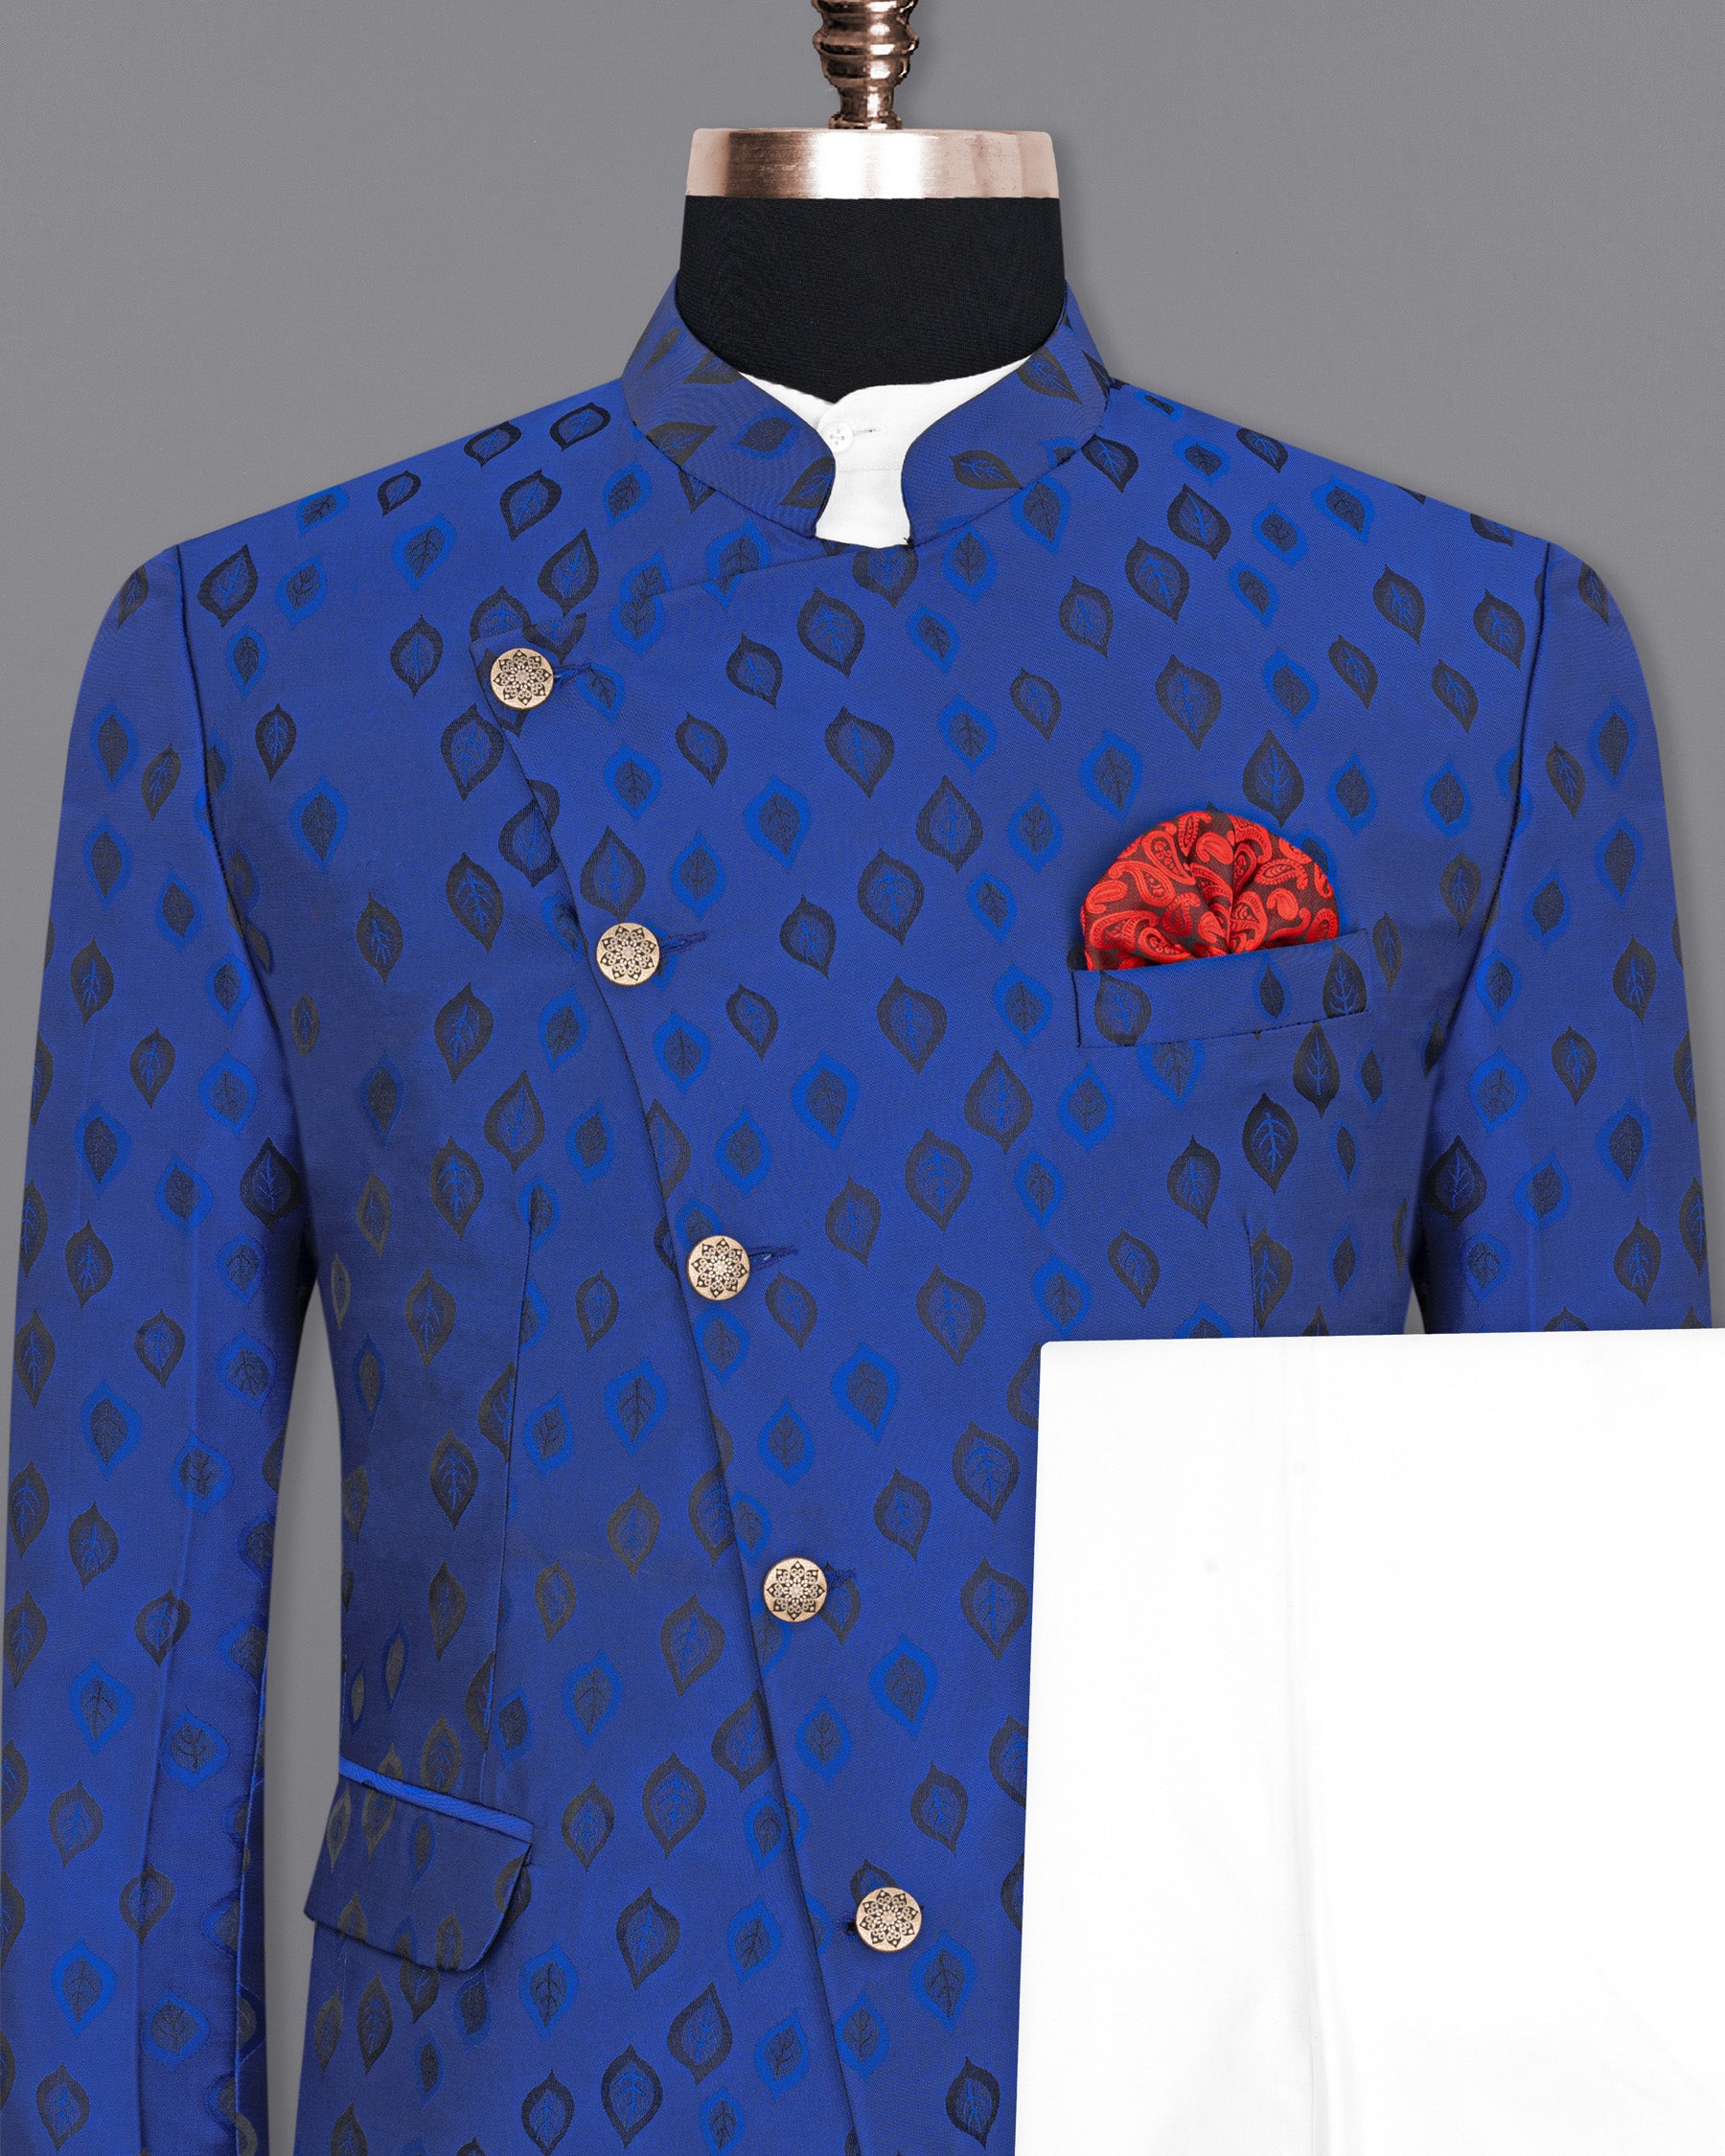 Royal Azure Blue Leaves Jacquard Textured Cross Buttoned Bandhgala Designer Suit ST1678-CBG-38, ST1678-CBG-H-38, ST1678-CBG-39, ST1678-CBG-H-39, ST1678-CBG-40, ST1678-CBG-H-40, ST1678-CBG-42, ST1678-CBG-H-42, ST1678-CBG-44, ST1678-CBG-H-44, ST1678-CBG-46, ST1678-CBG-H-46, ST1678-CBG-48, ST1678-CBG-H-48, ST1678-CBG-50, ST1678-CBG-H-50, ST1678-CBG-52, ST1678-CBG-H-52